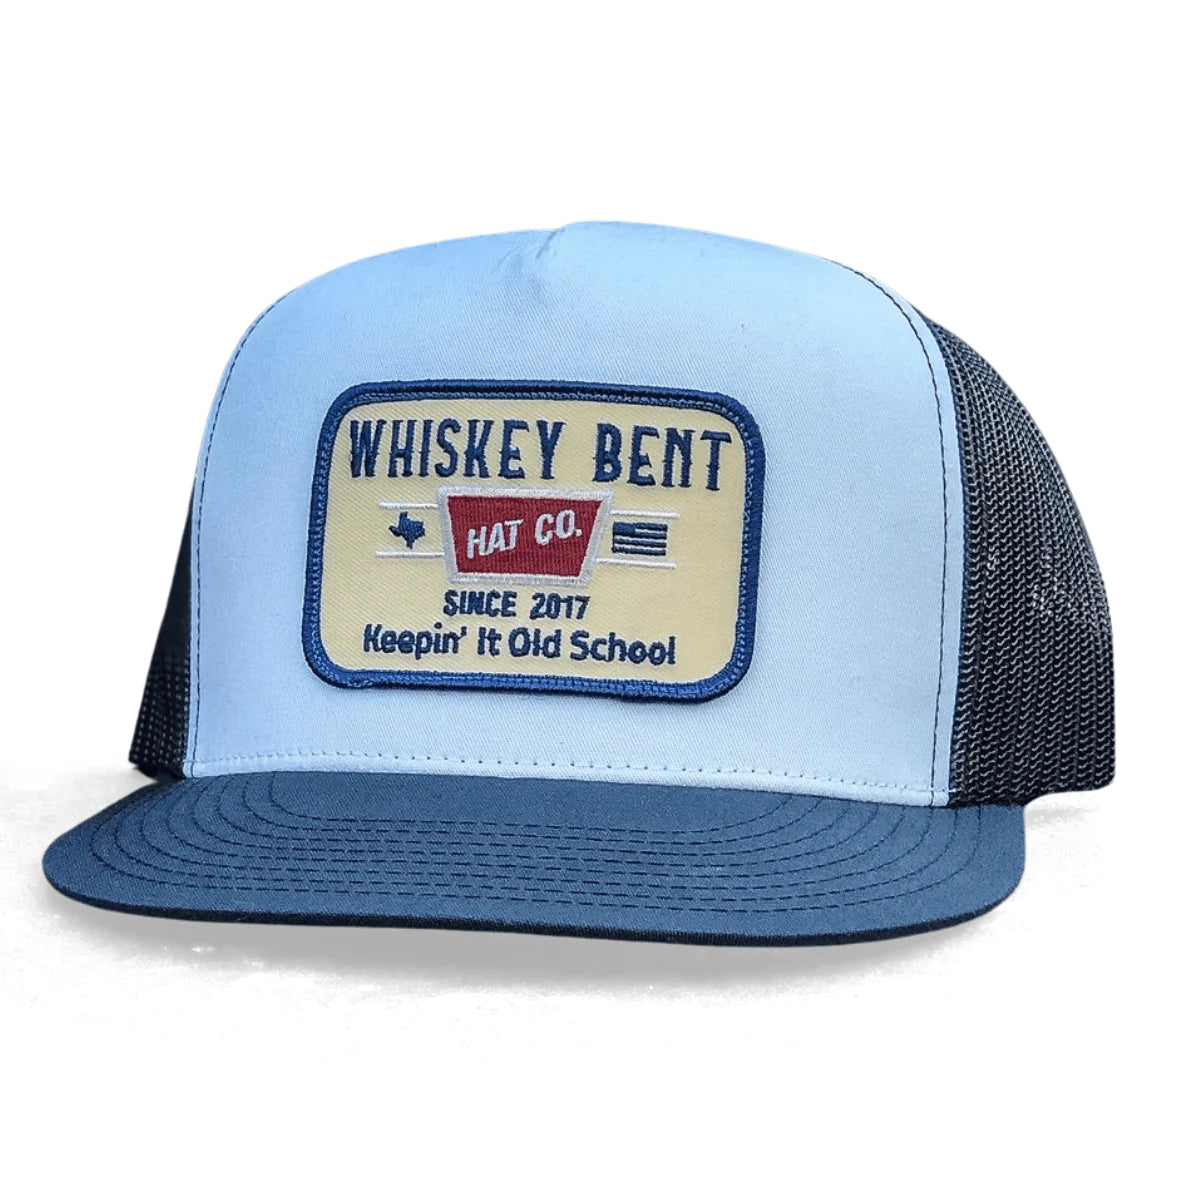 The Brewski Hat